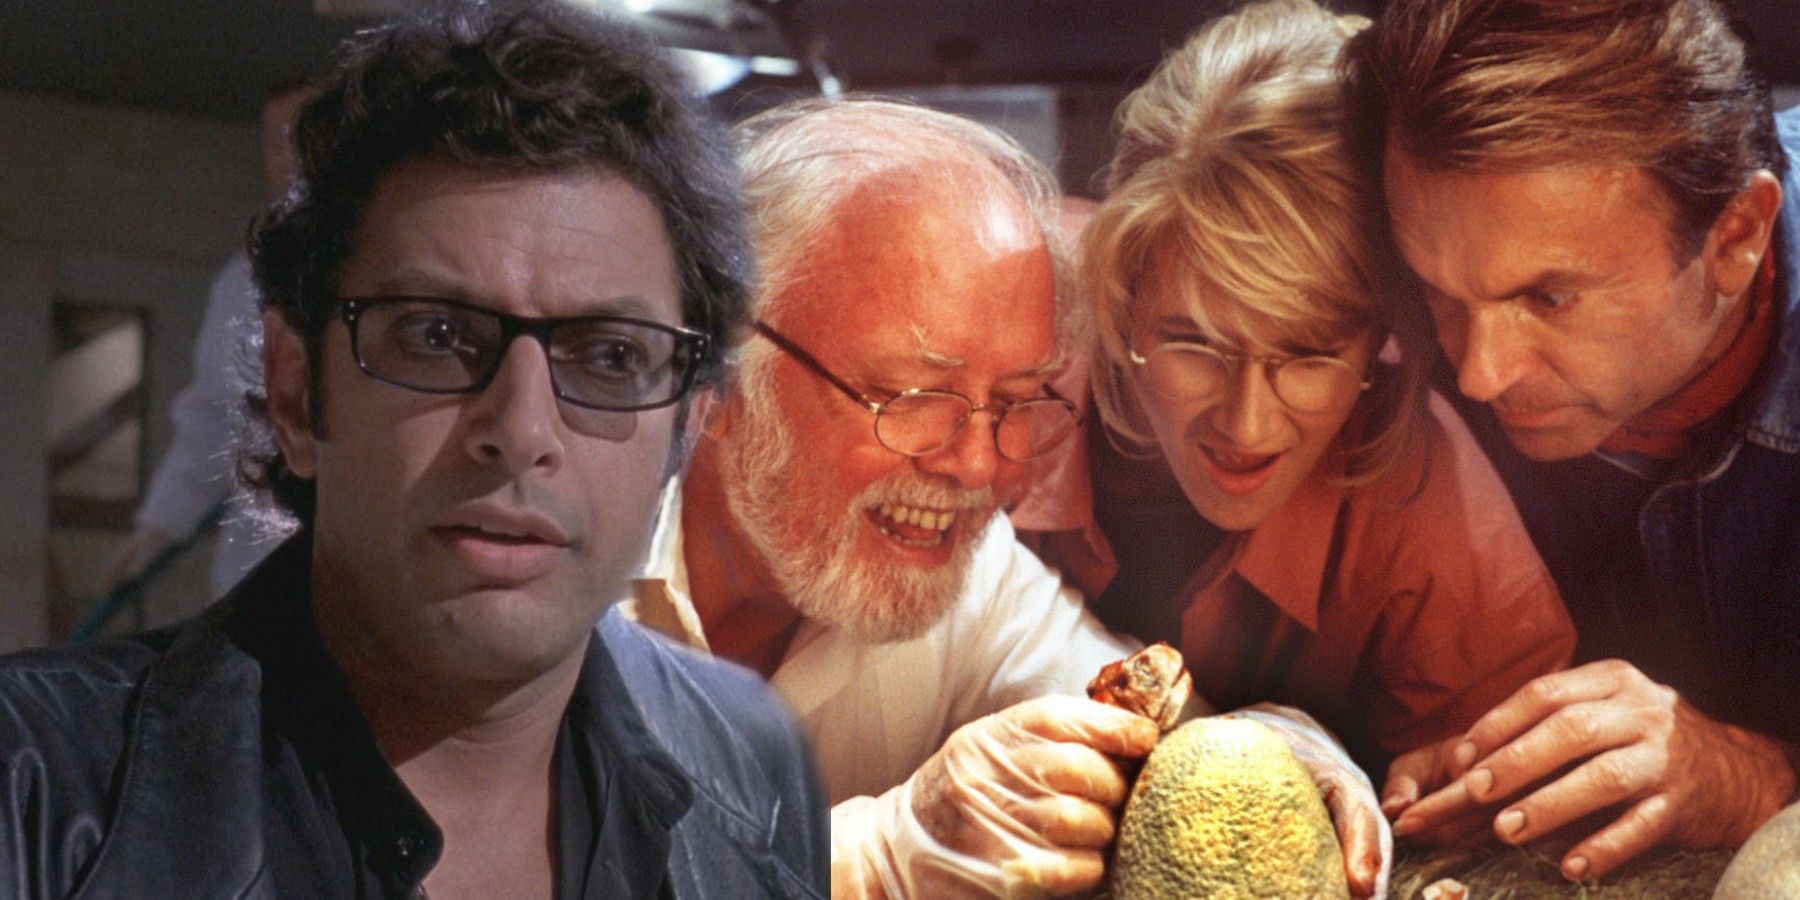 Jurassic Park - Dr Ian Malcolm - Dr John Hammond - Dr Ellie Sattler - Dr Alan Grant - Dinosaur egg hatching